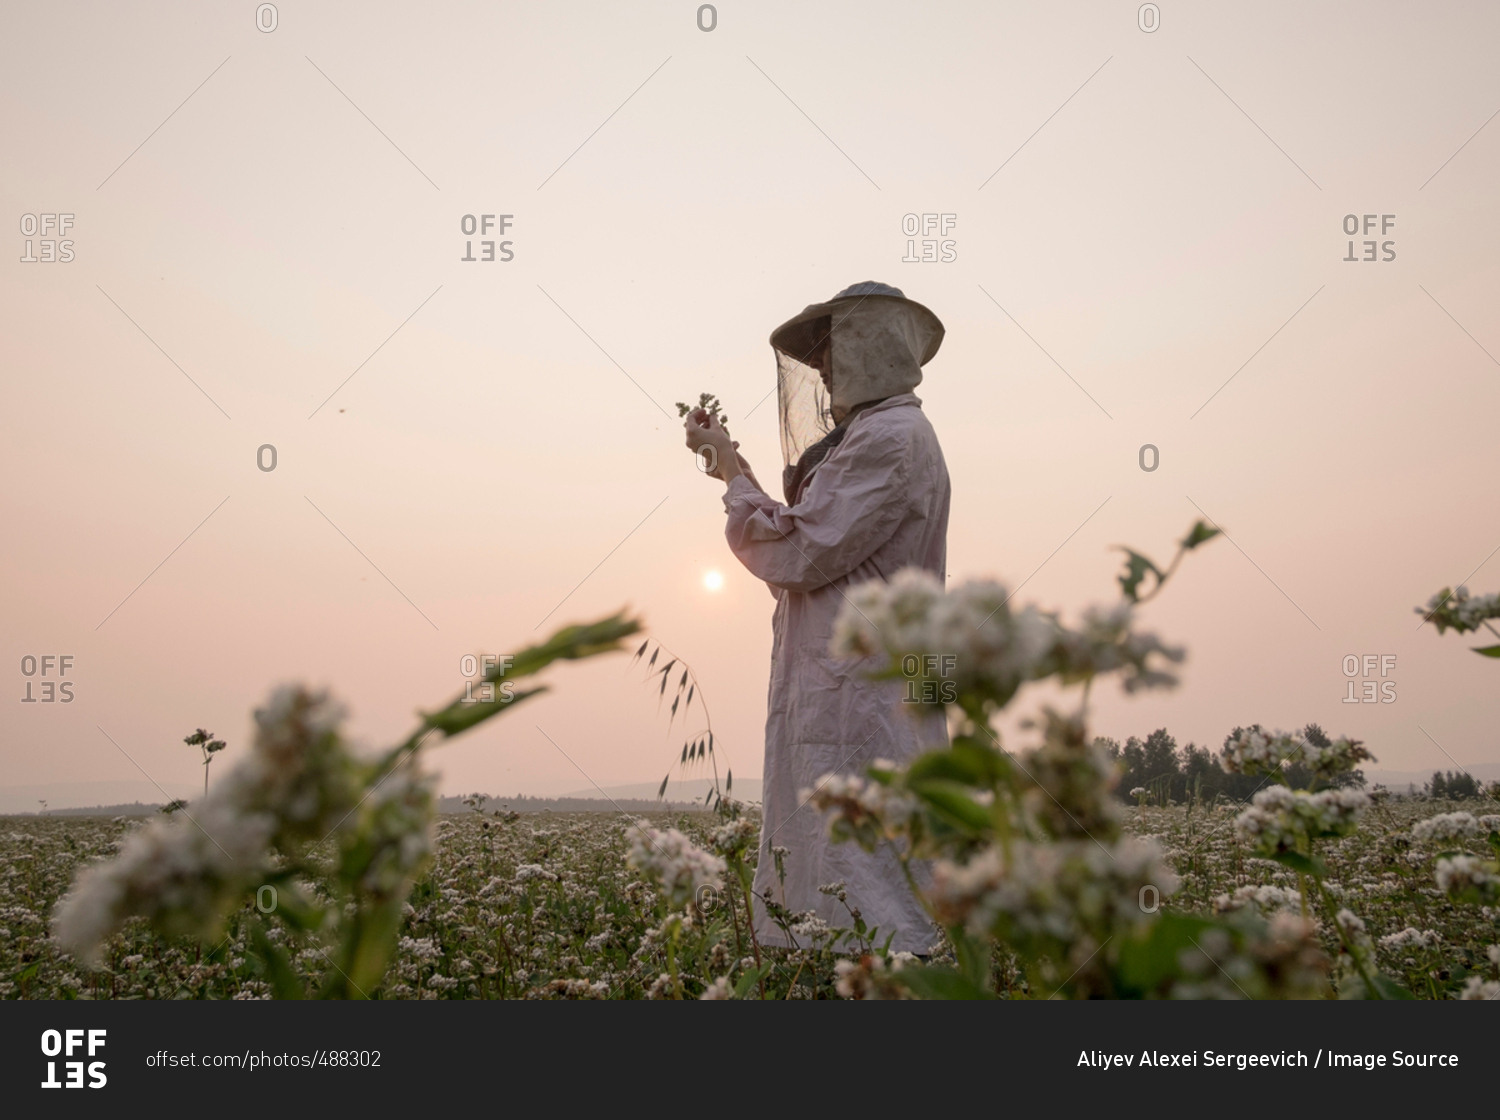 Female beekeeper inspecting plant in flower field at dusk, Ural, Russia